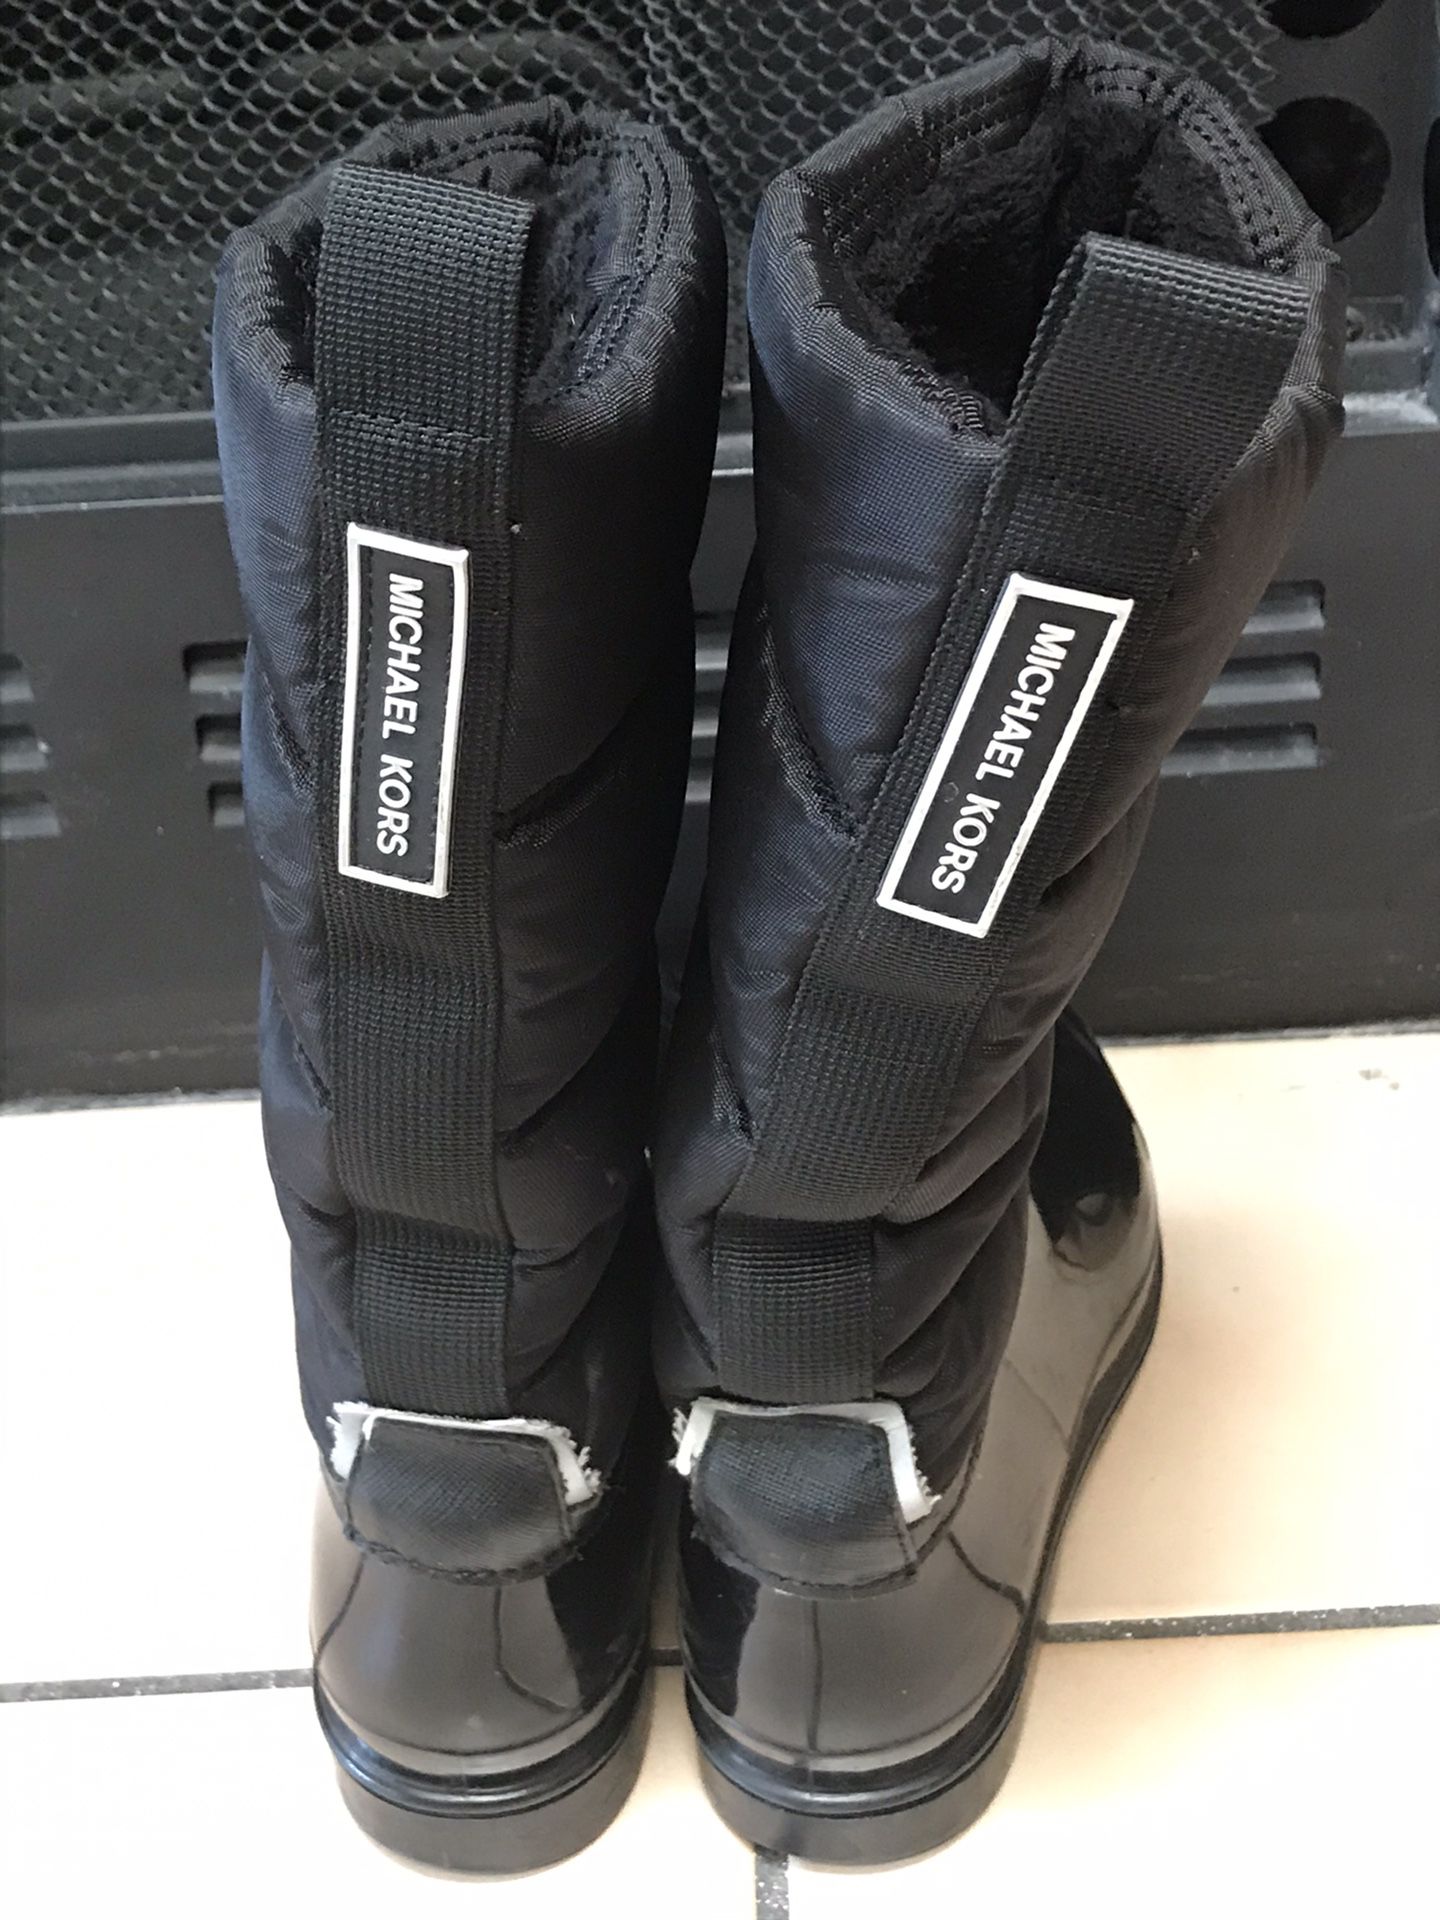 MichaelKors Rain boots size8